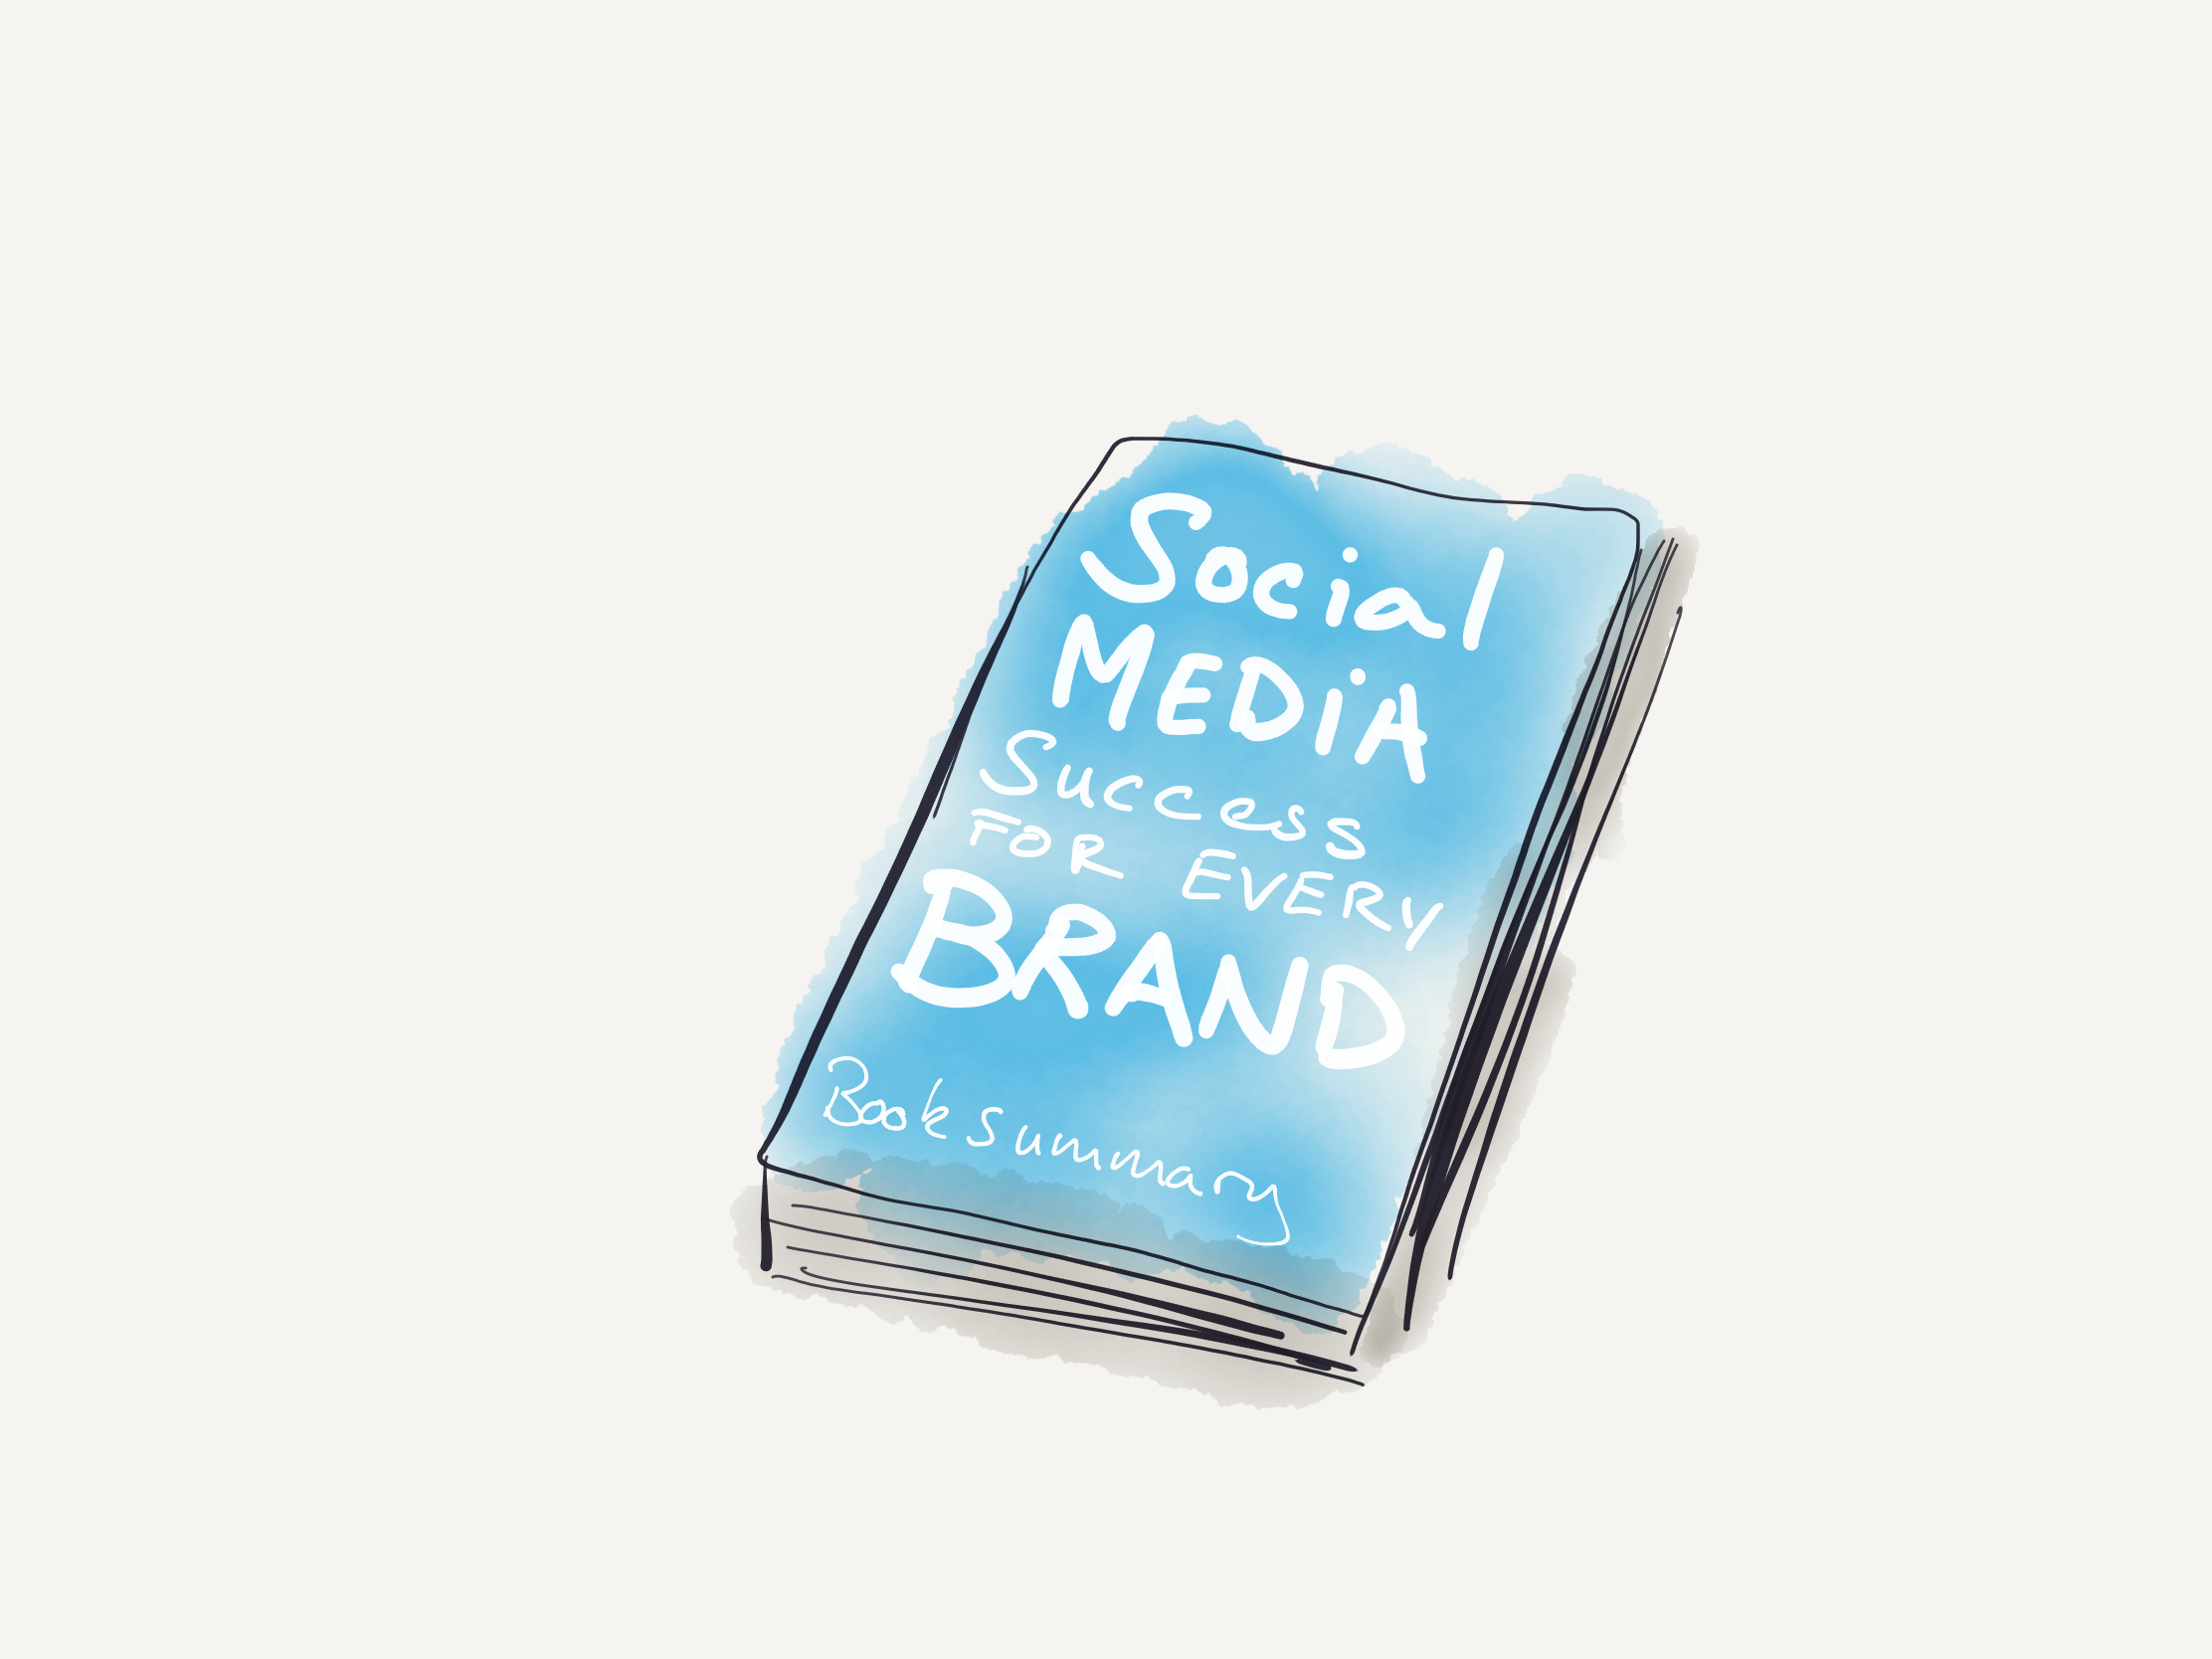 Social media success for every brand book summary